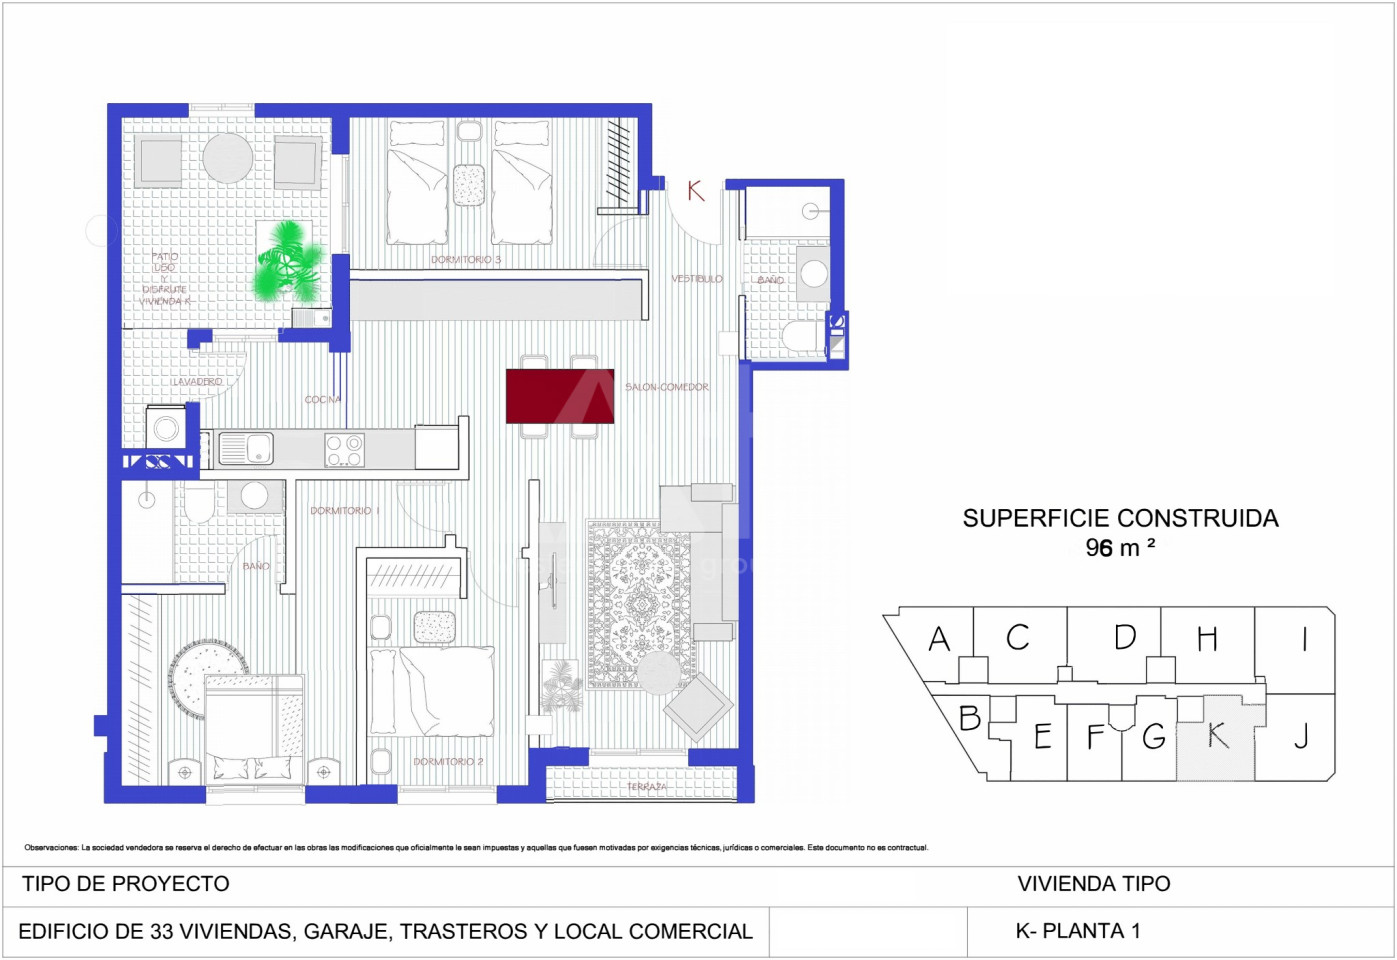 3 bedroom Penthouse in Alcantarilla - MW46520 - 1